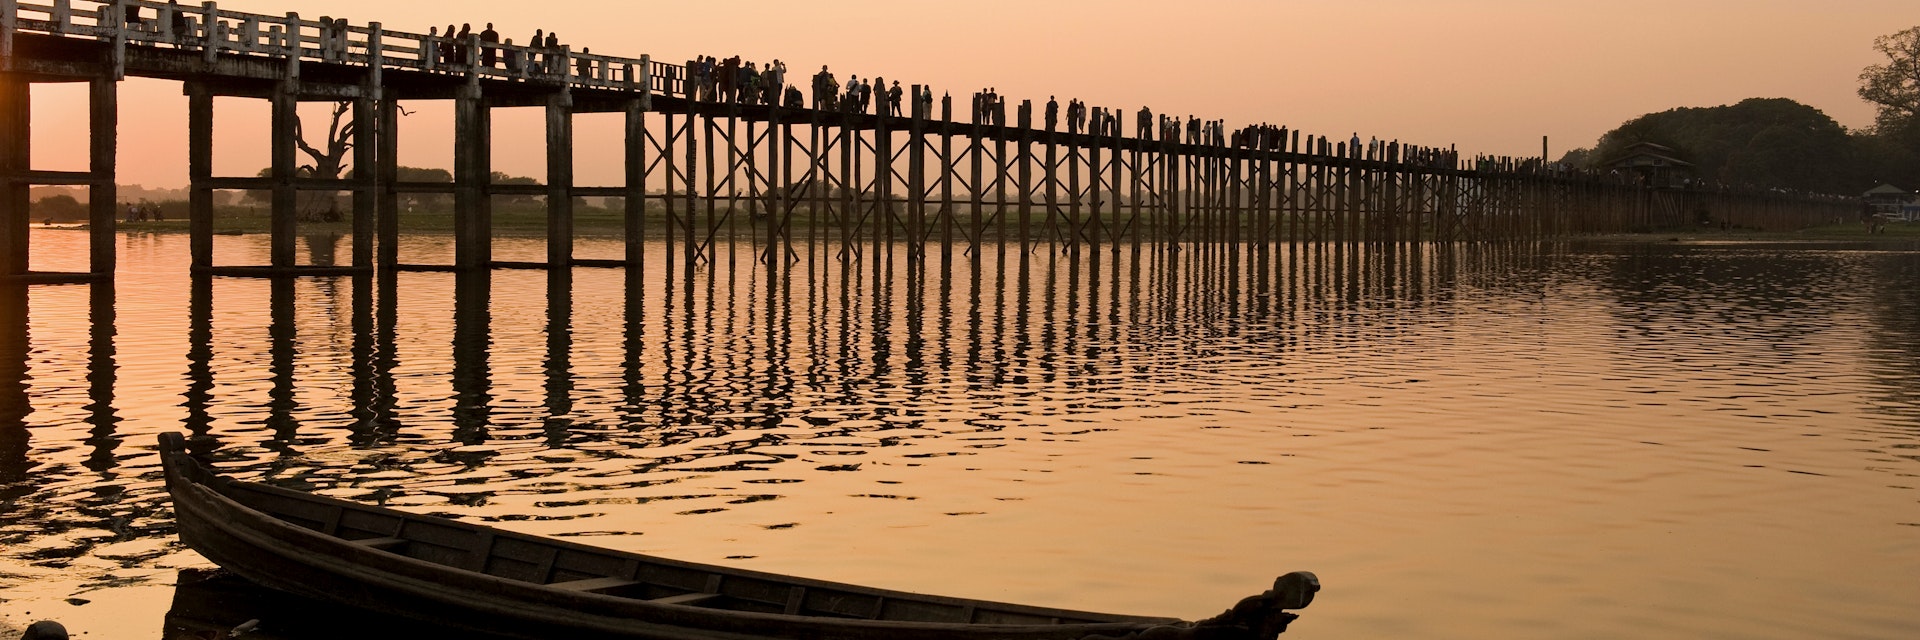 Footbridge Ubein Teakwood. Connects Amarapura To A Pagoda On The Other Side Of The Lake. Myanmar. (Photo by: EyeOn/UIG via Getty Images)